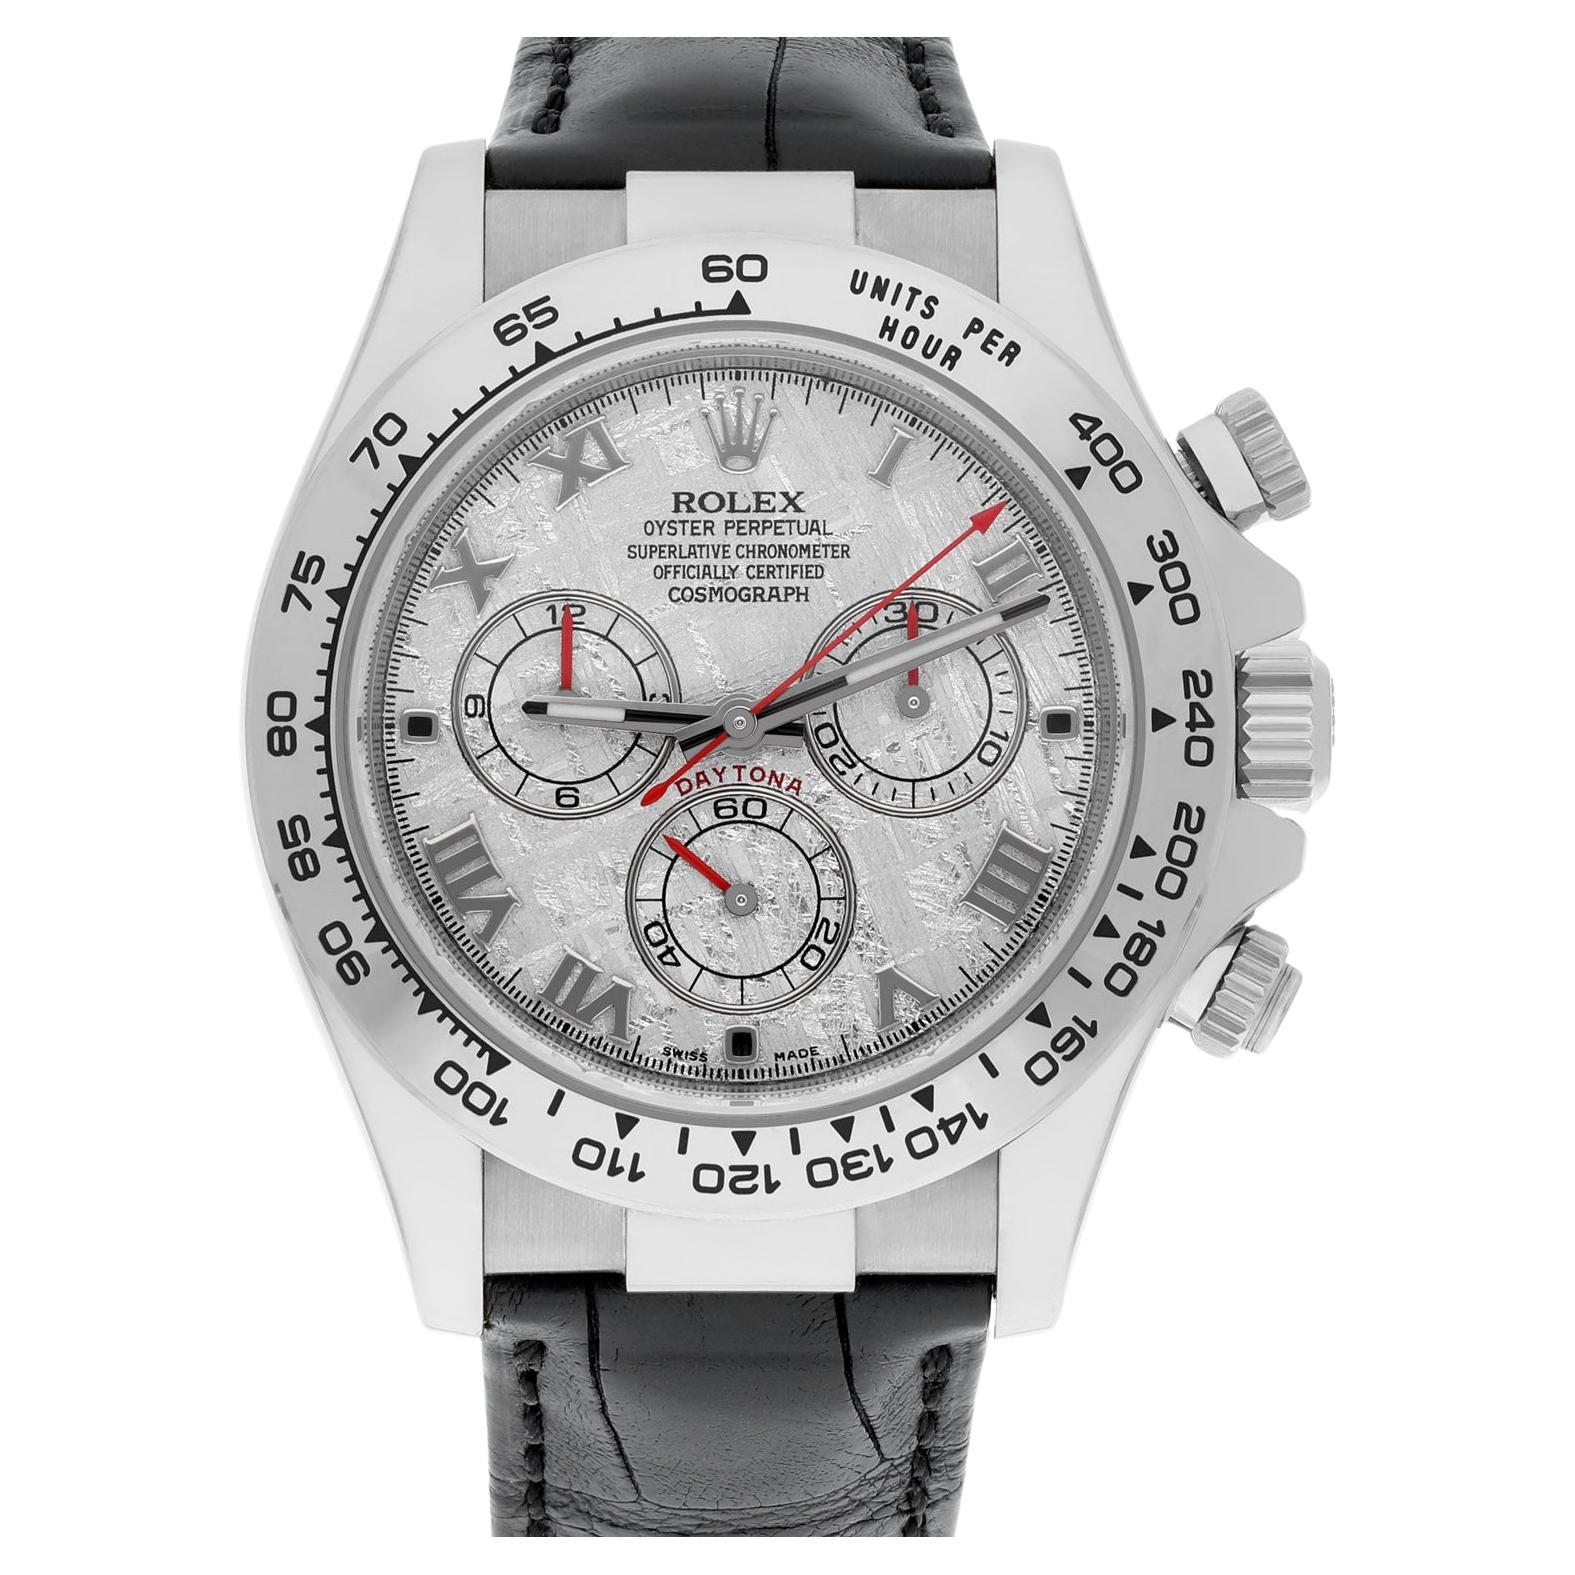 Rolex 116519 Cosmograph Daytona Meteorite Dial White Gold Men's Watch Complete